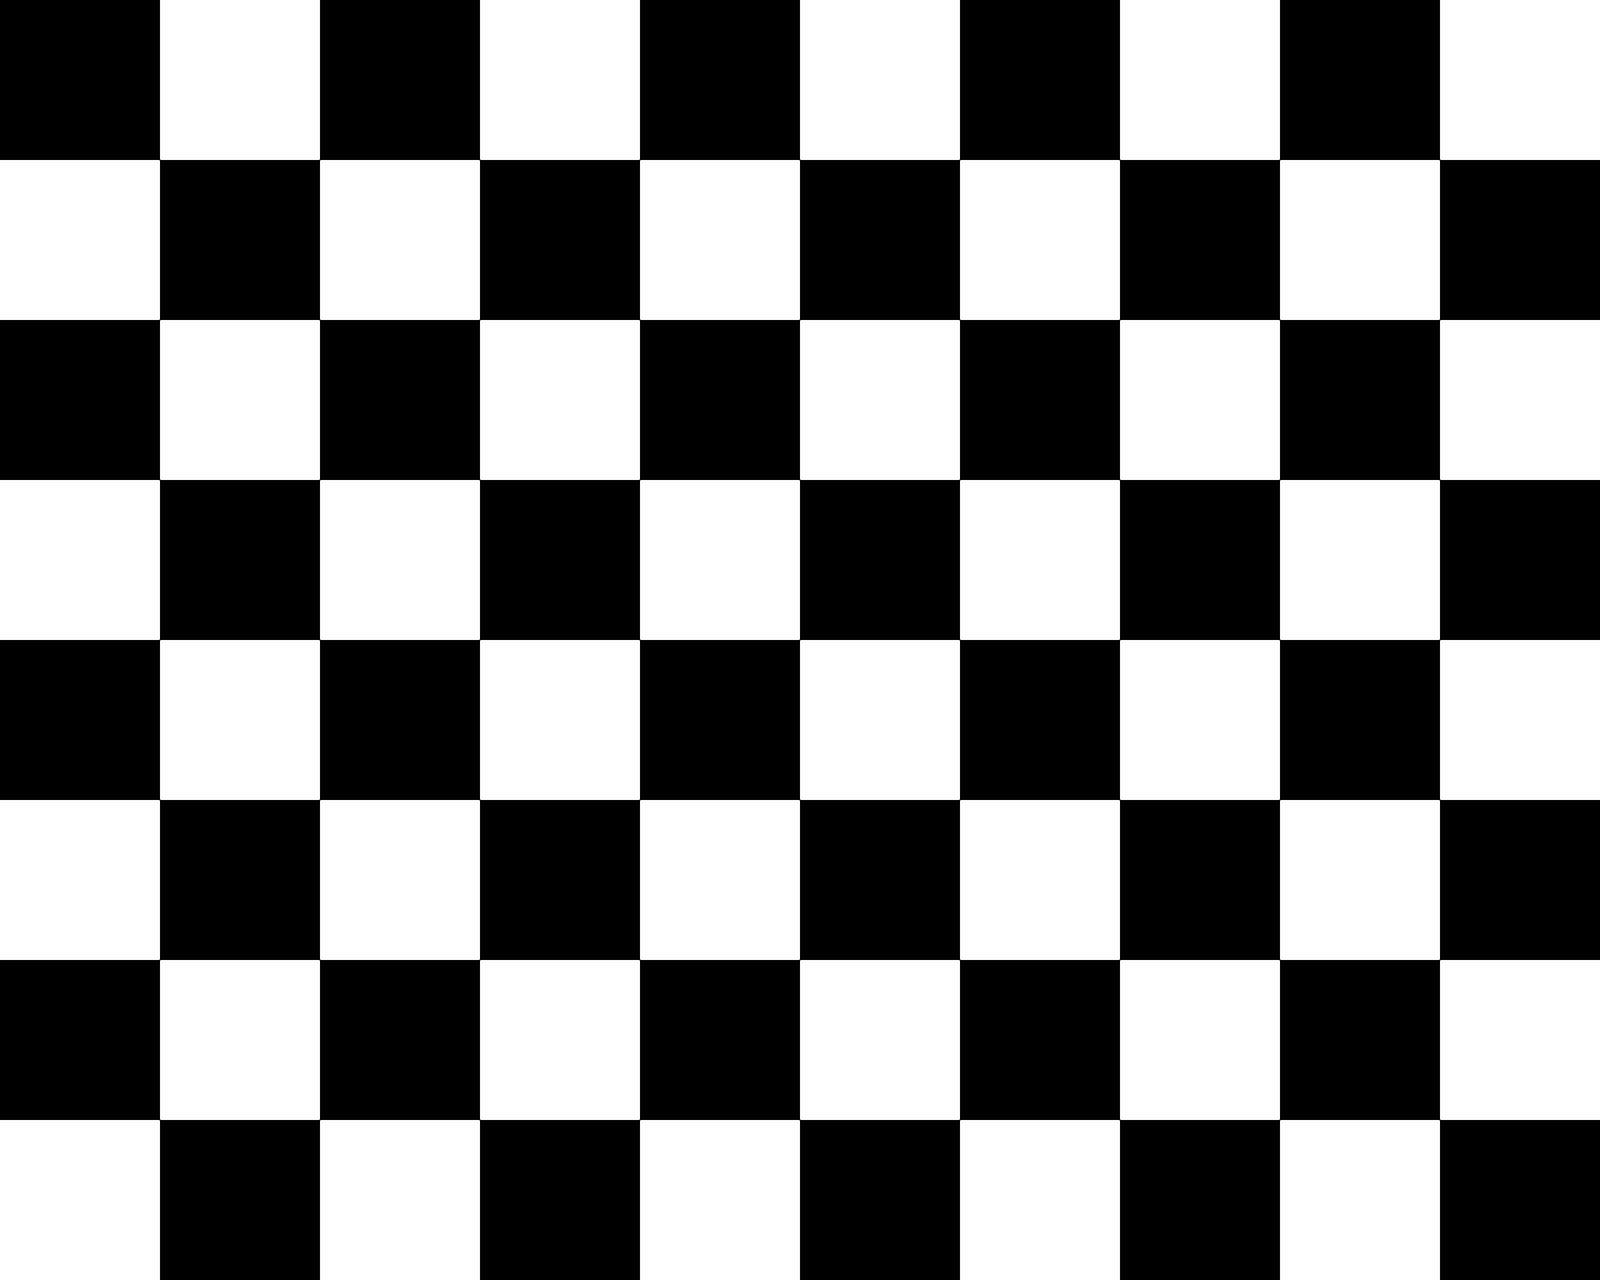 Chequered Checkered Flag Wallpaper Background Motorsports Stock  Illustration 327911360  Shutterstock